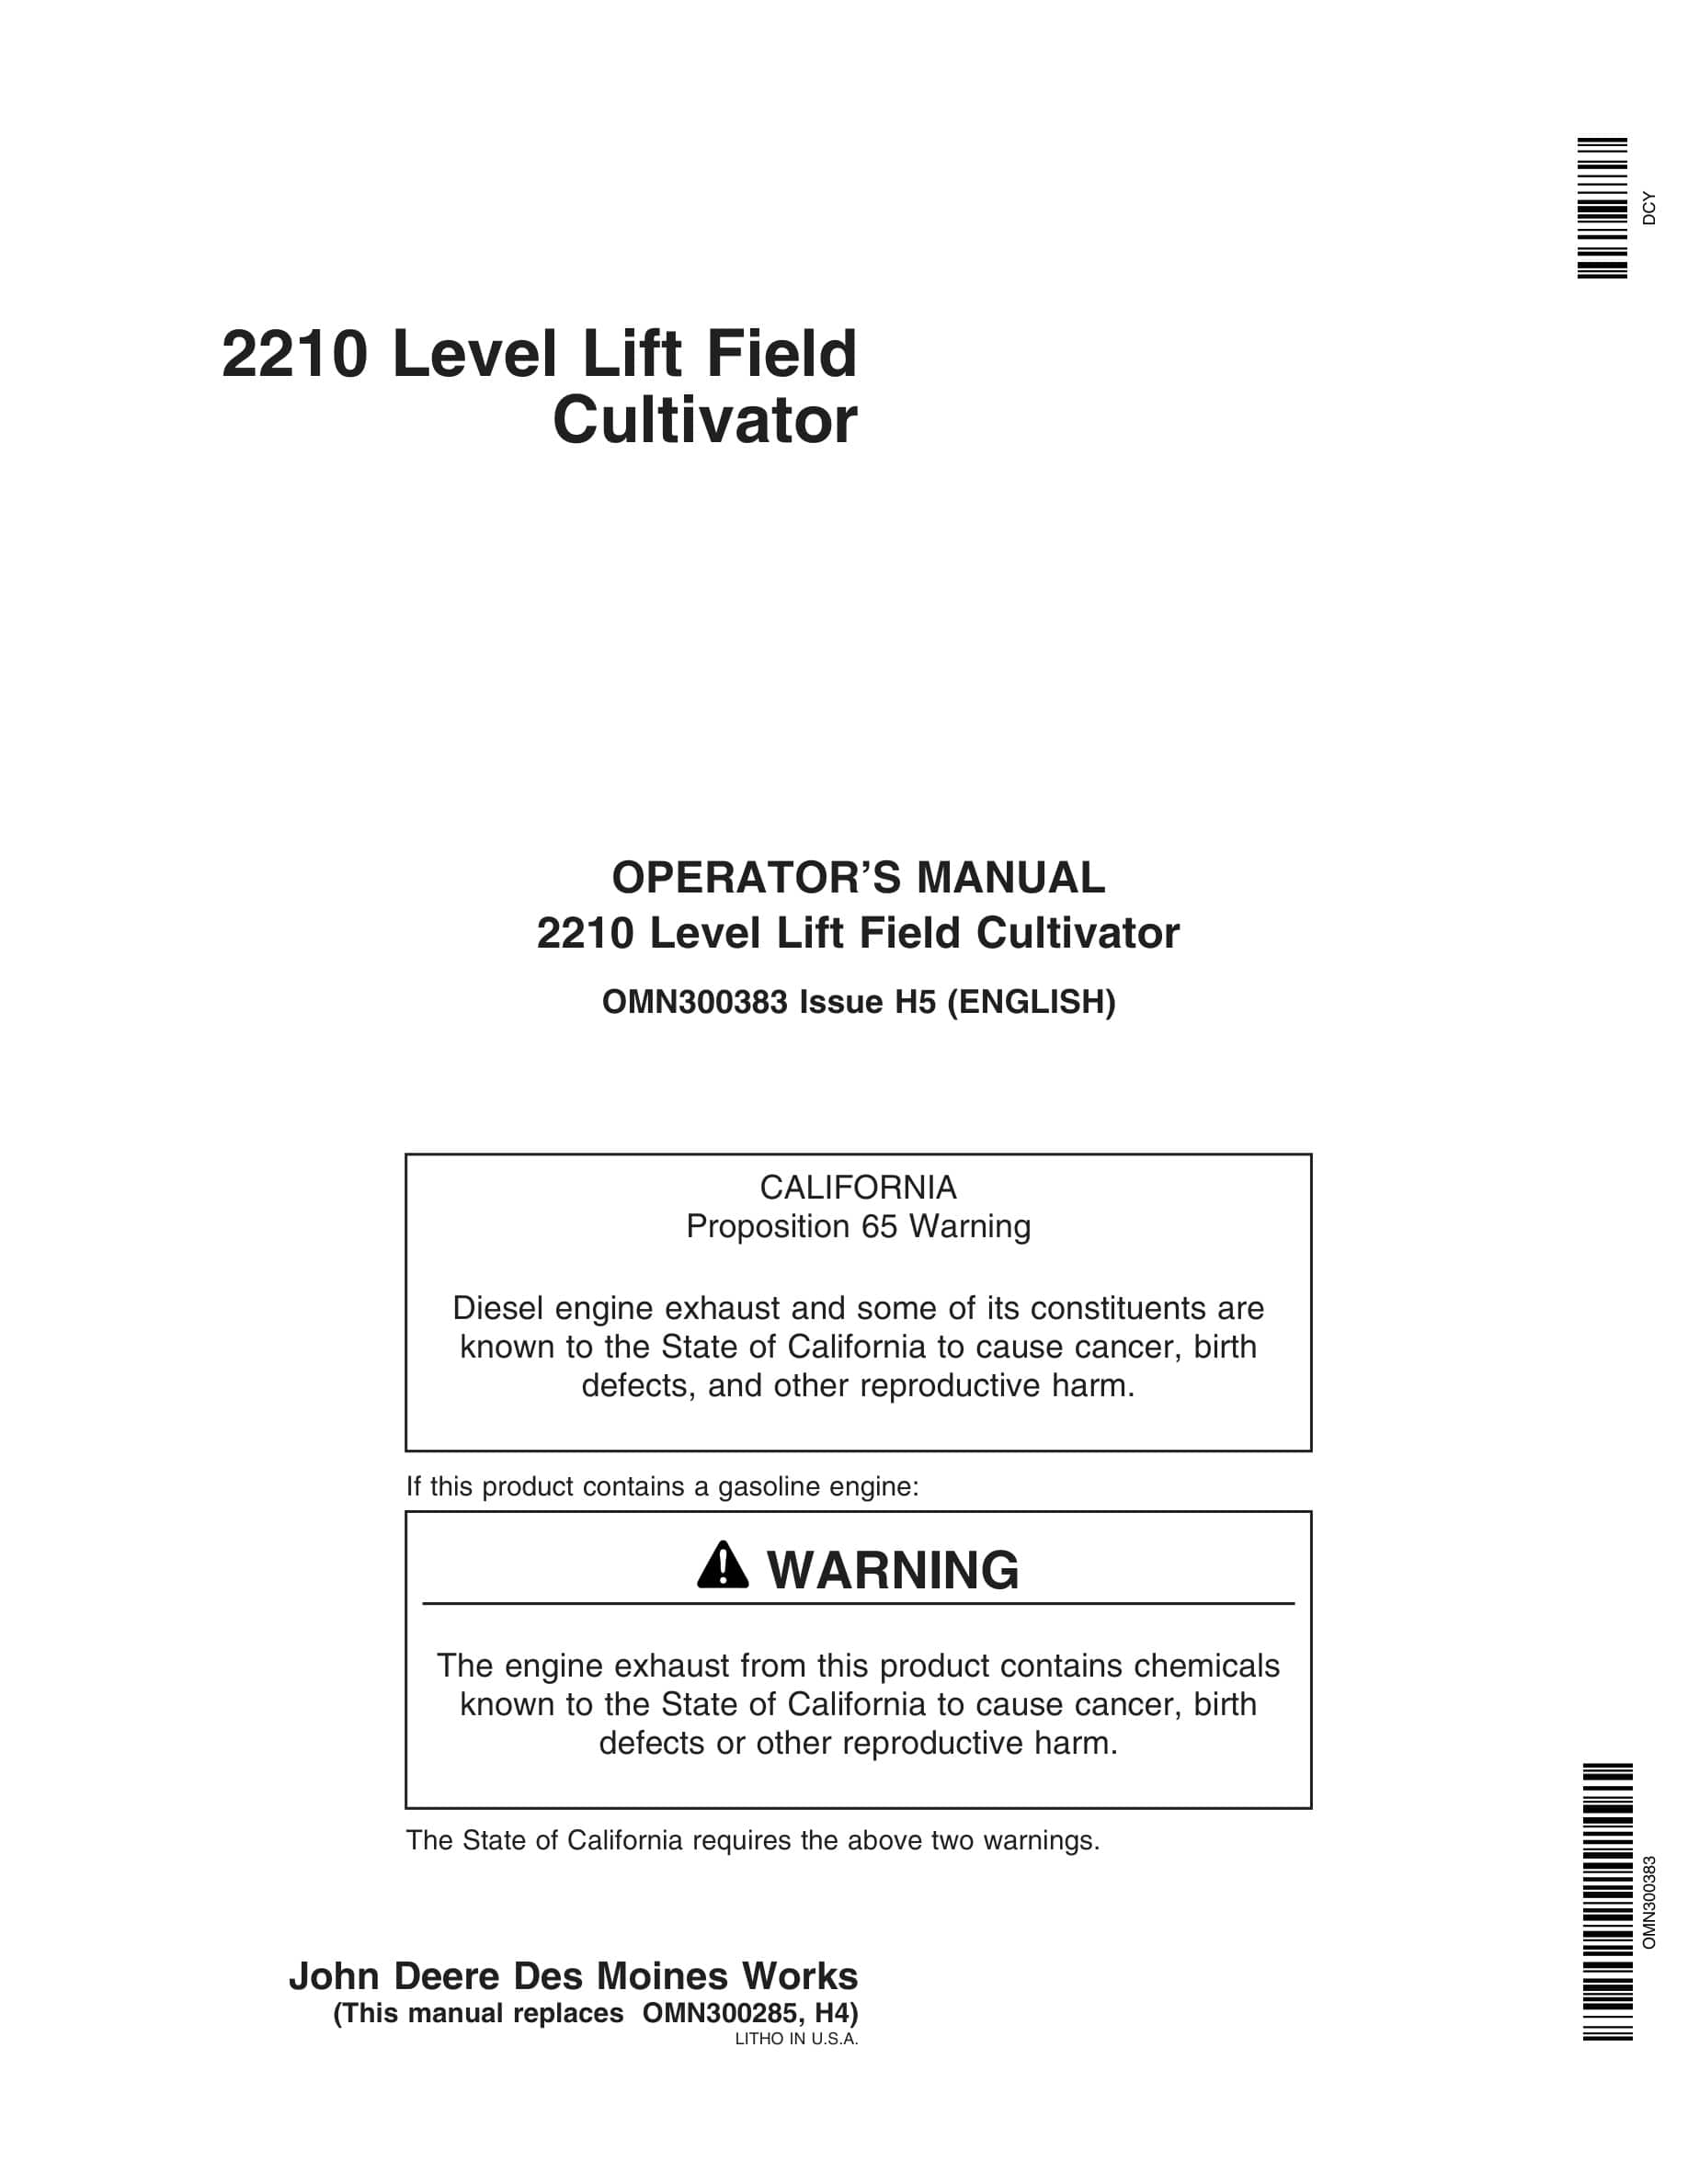 John Deere 2210 Level Lift Field Cultivator Operator Manual OMN300383-1